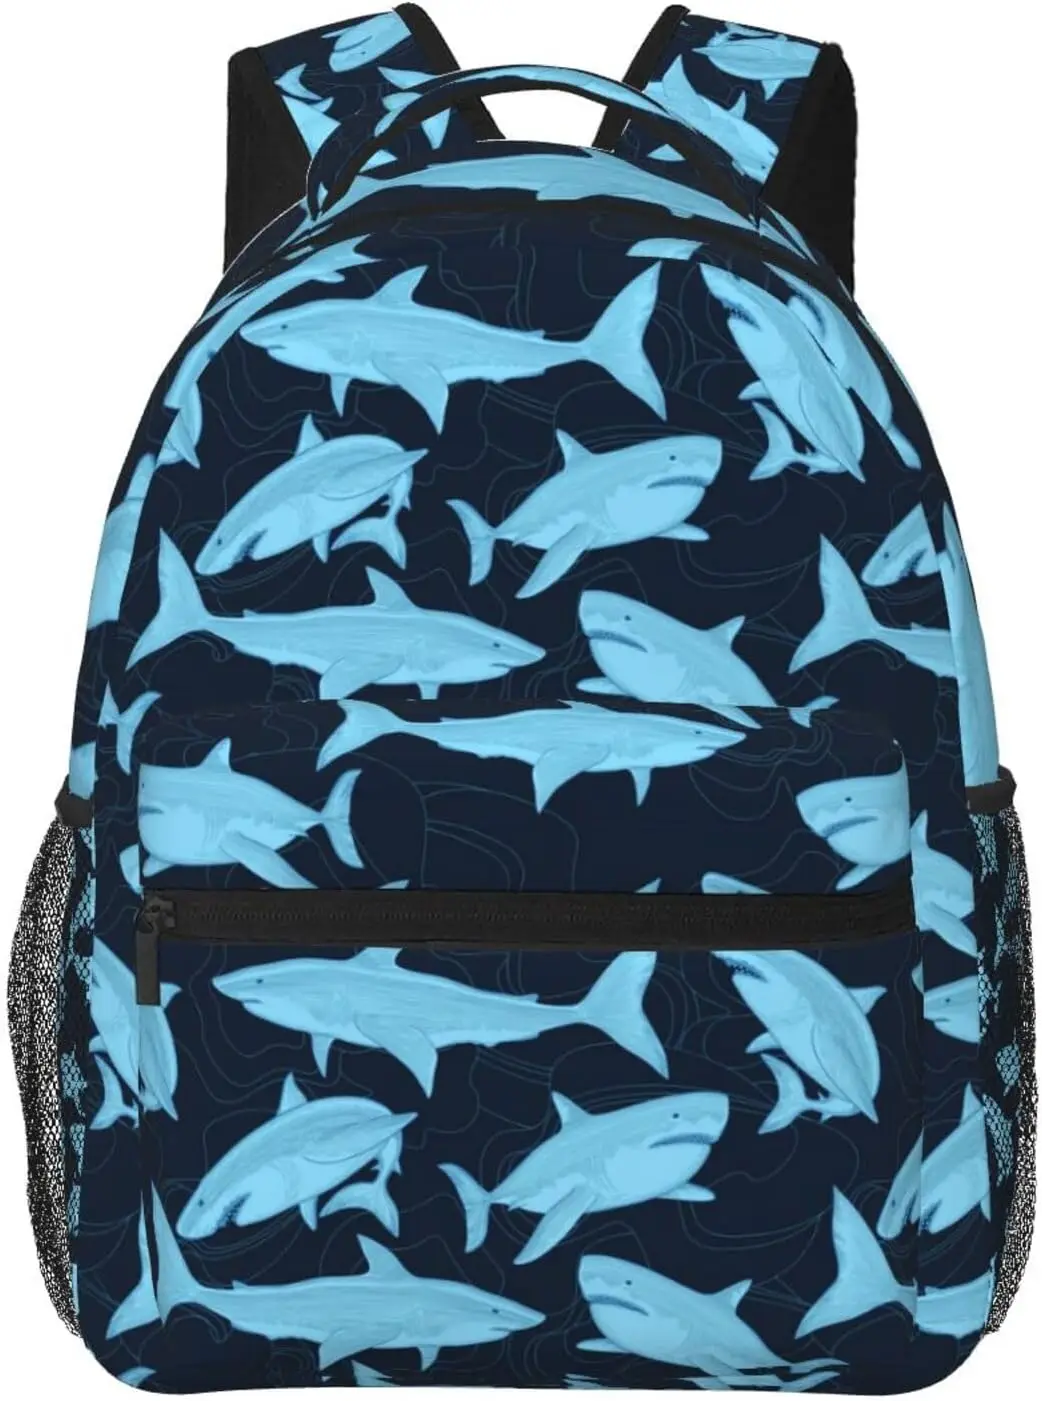 

Funny Shark Pattern Backpack Casual Hiking Camping Travel Backpacks Lightweight Daypack Bag Women Men Bookbag